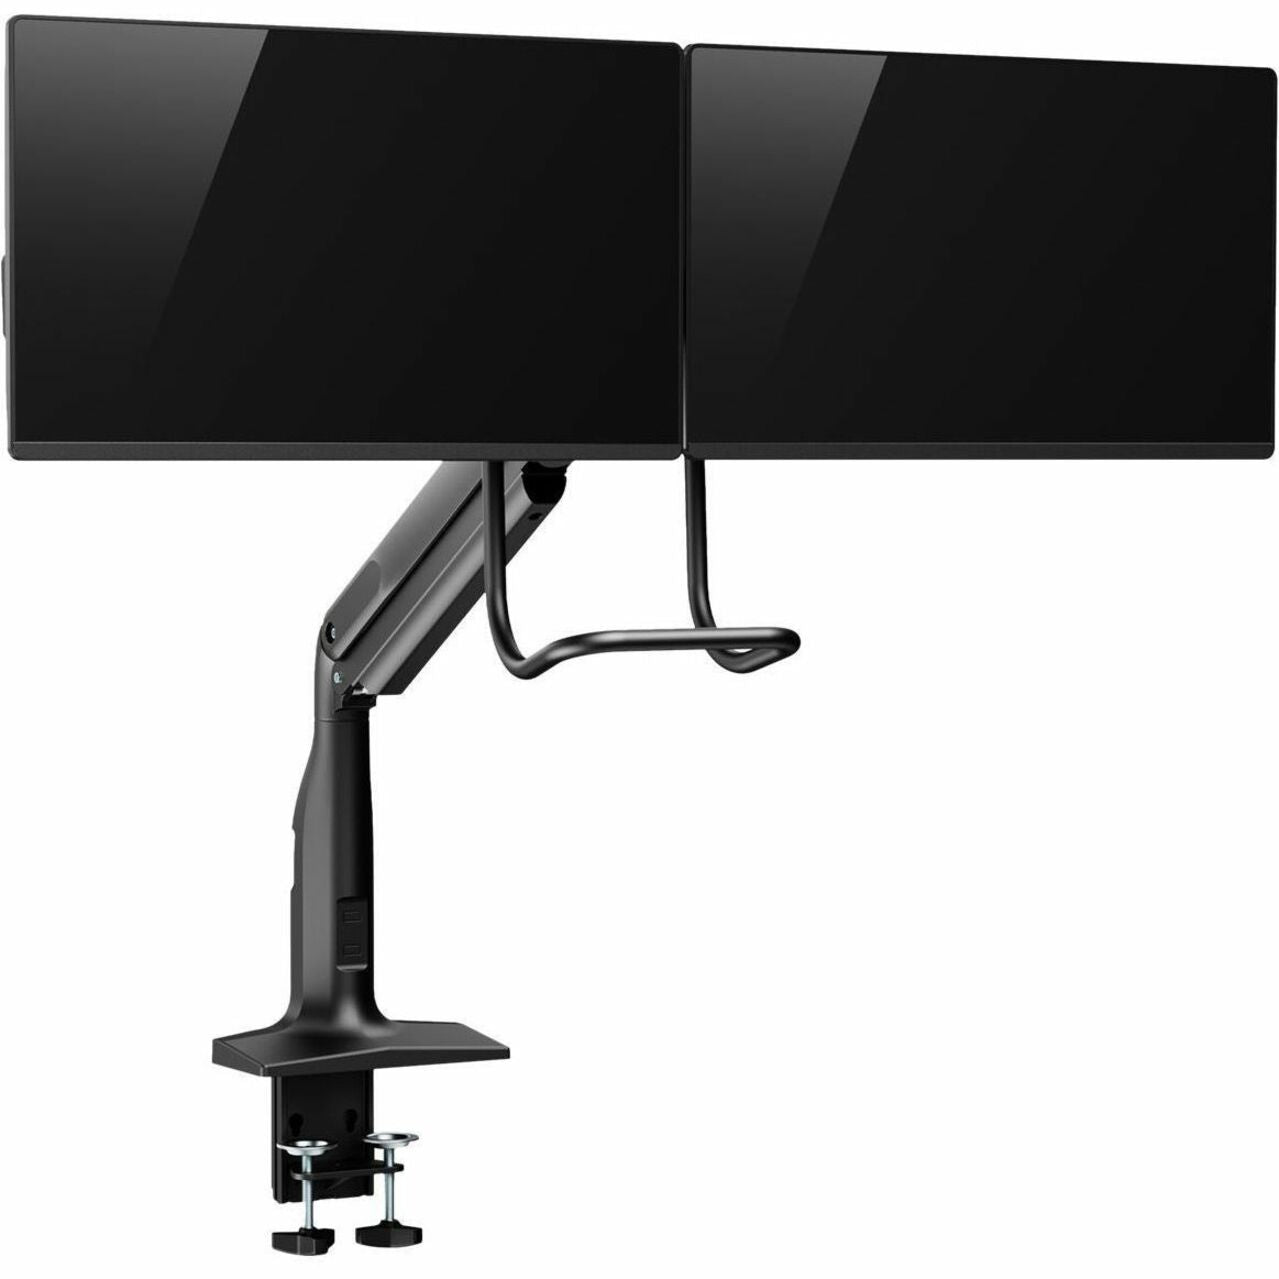 V7 DM1HDD Desk Mount for Monitor, Display - Matt Black